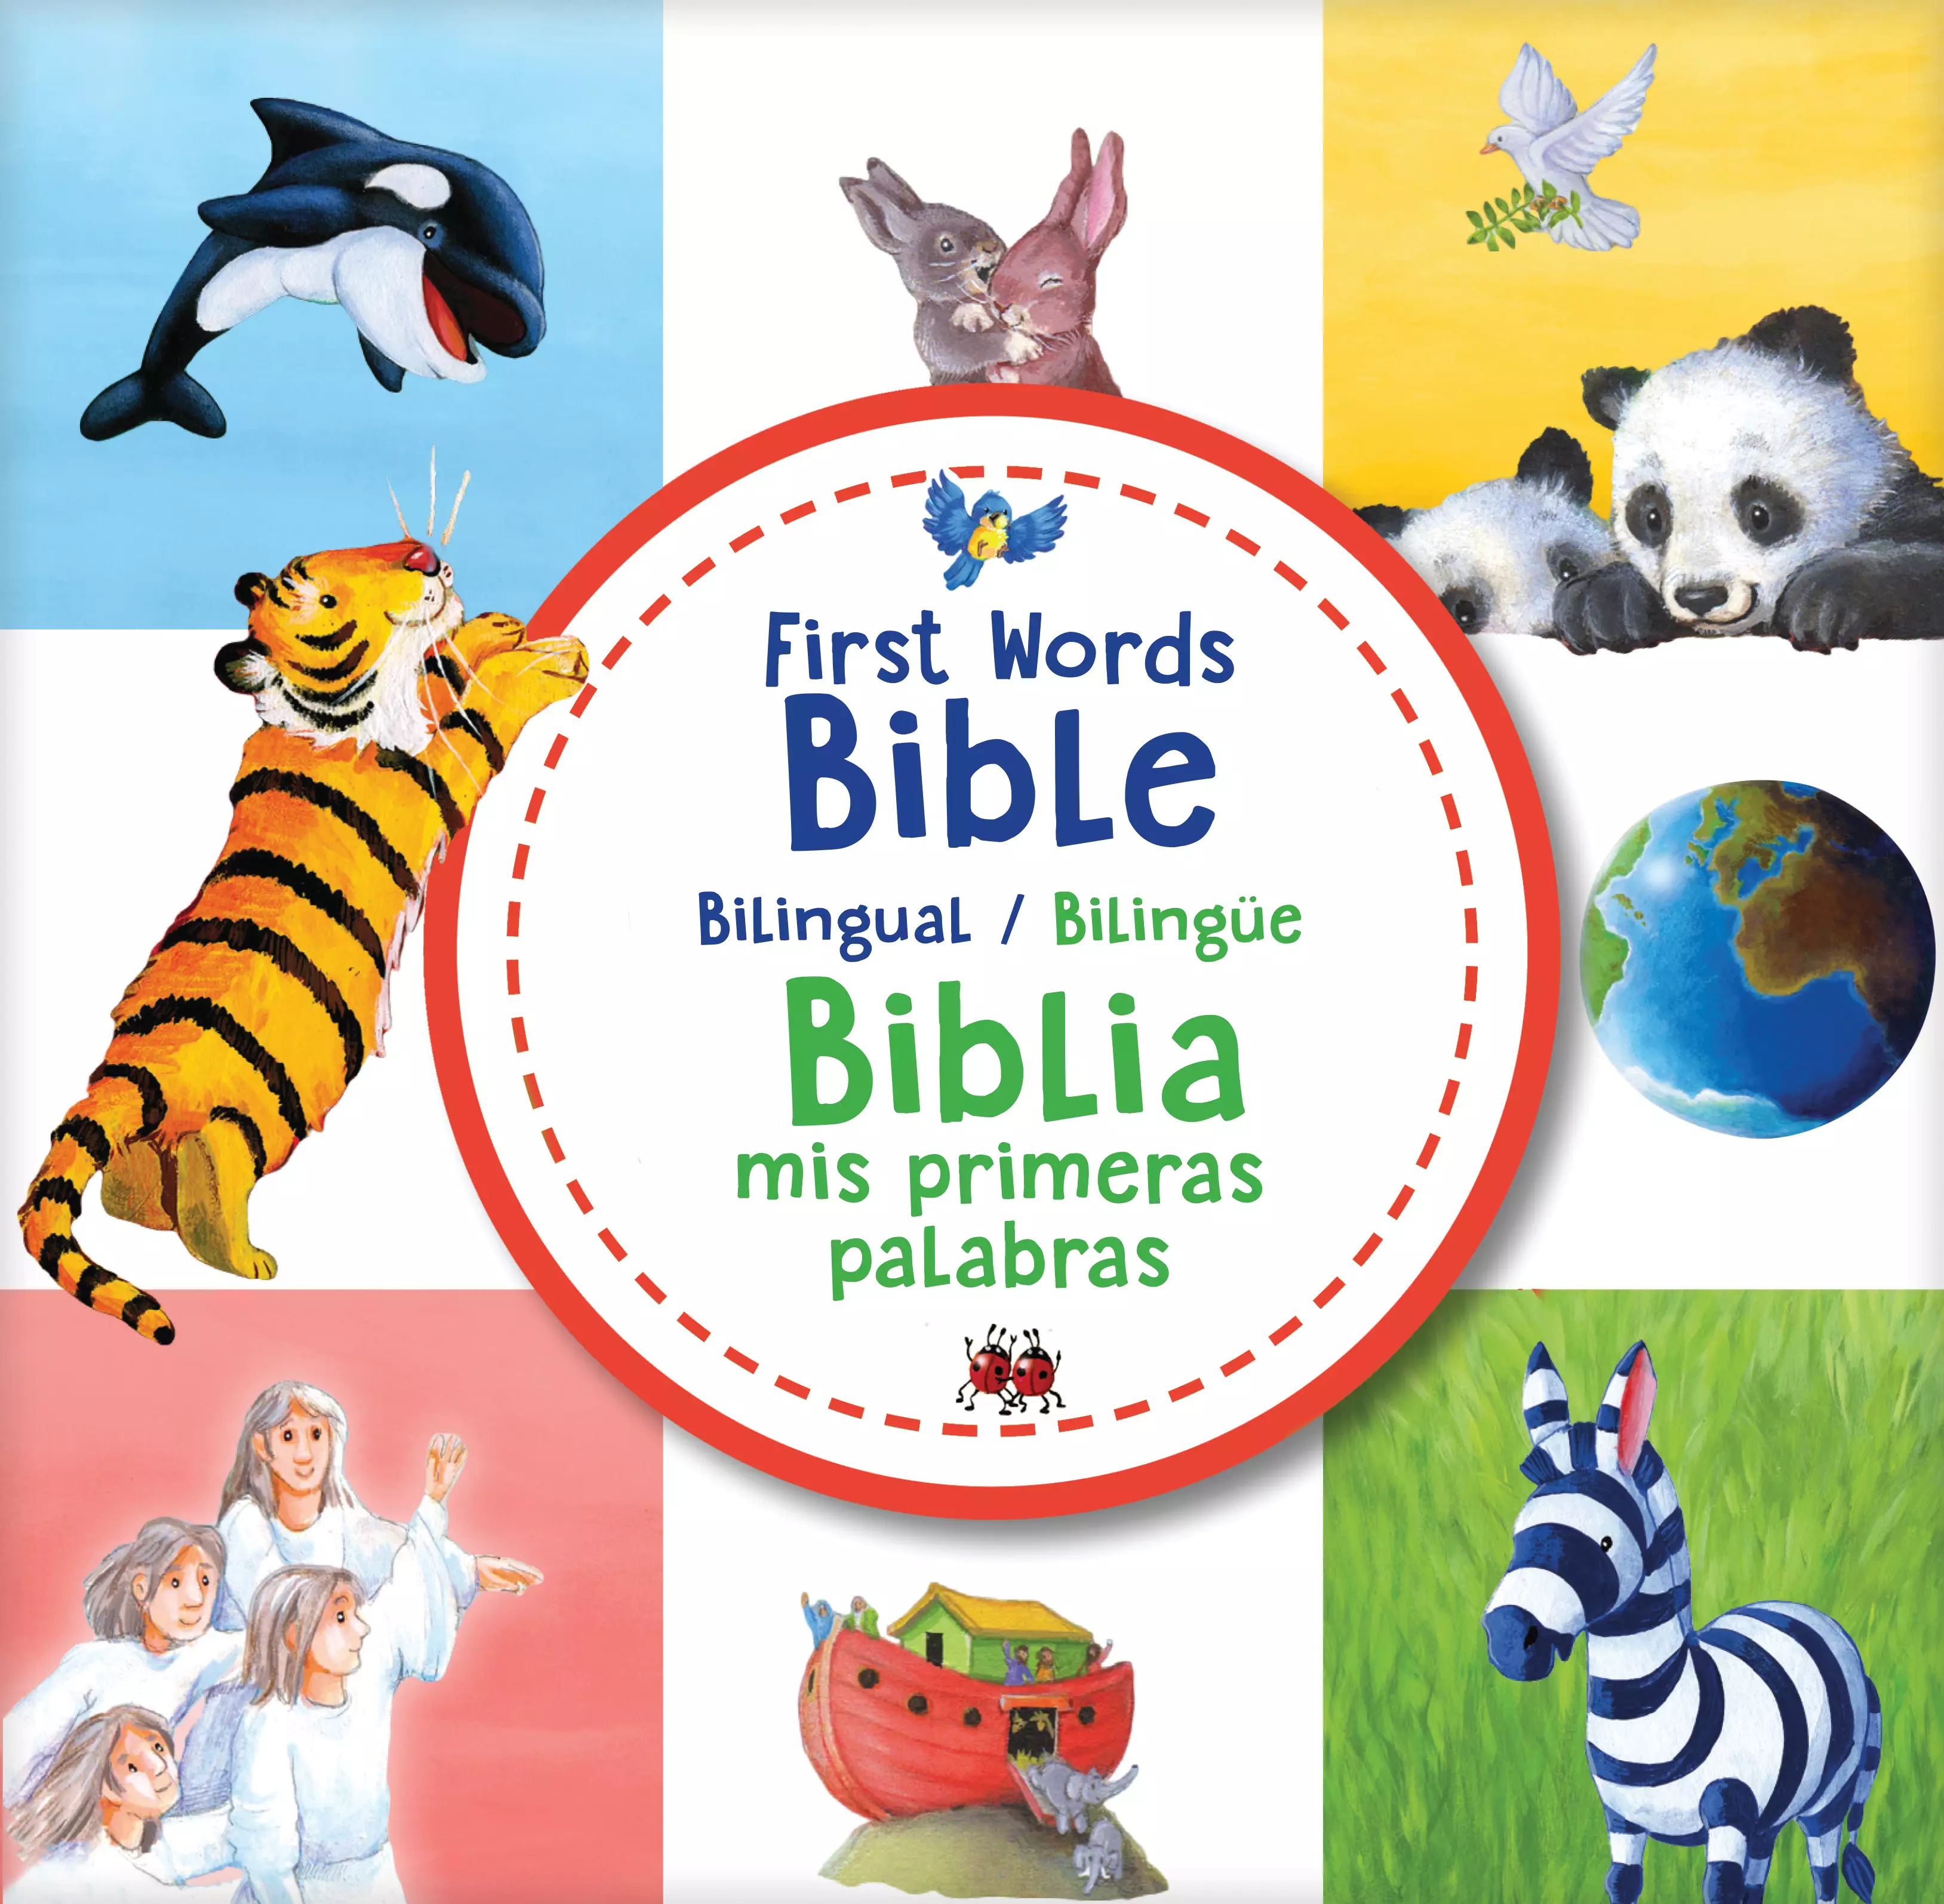 First Words Bible / Biblia mis primeras palabras (bilingual / bilingüe)